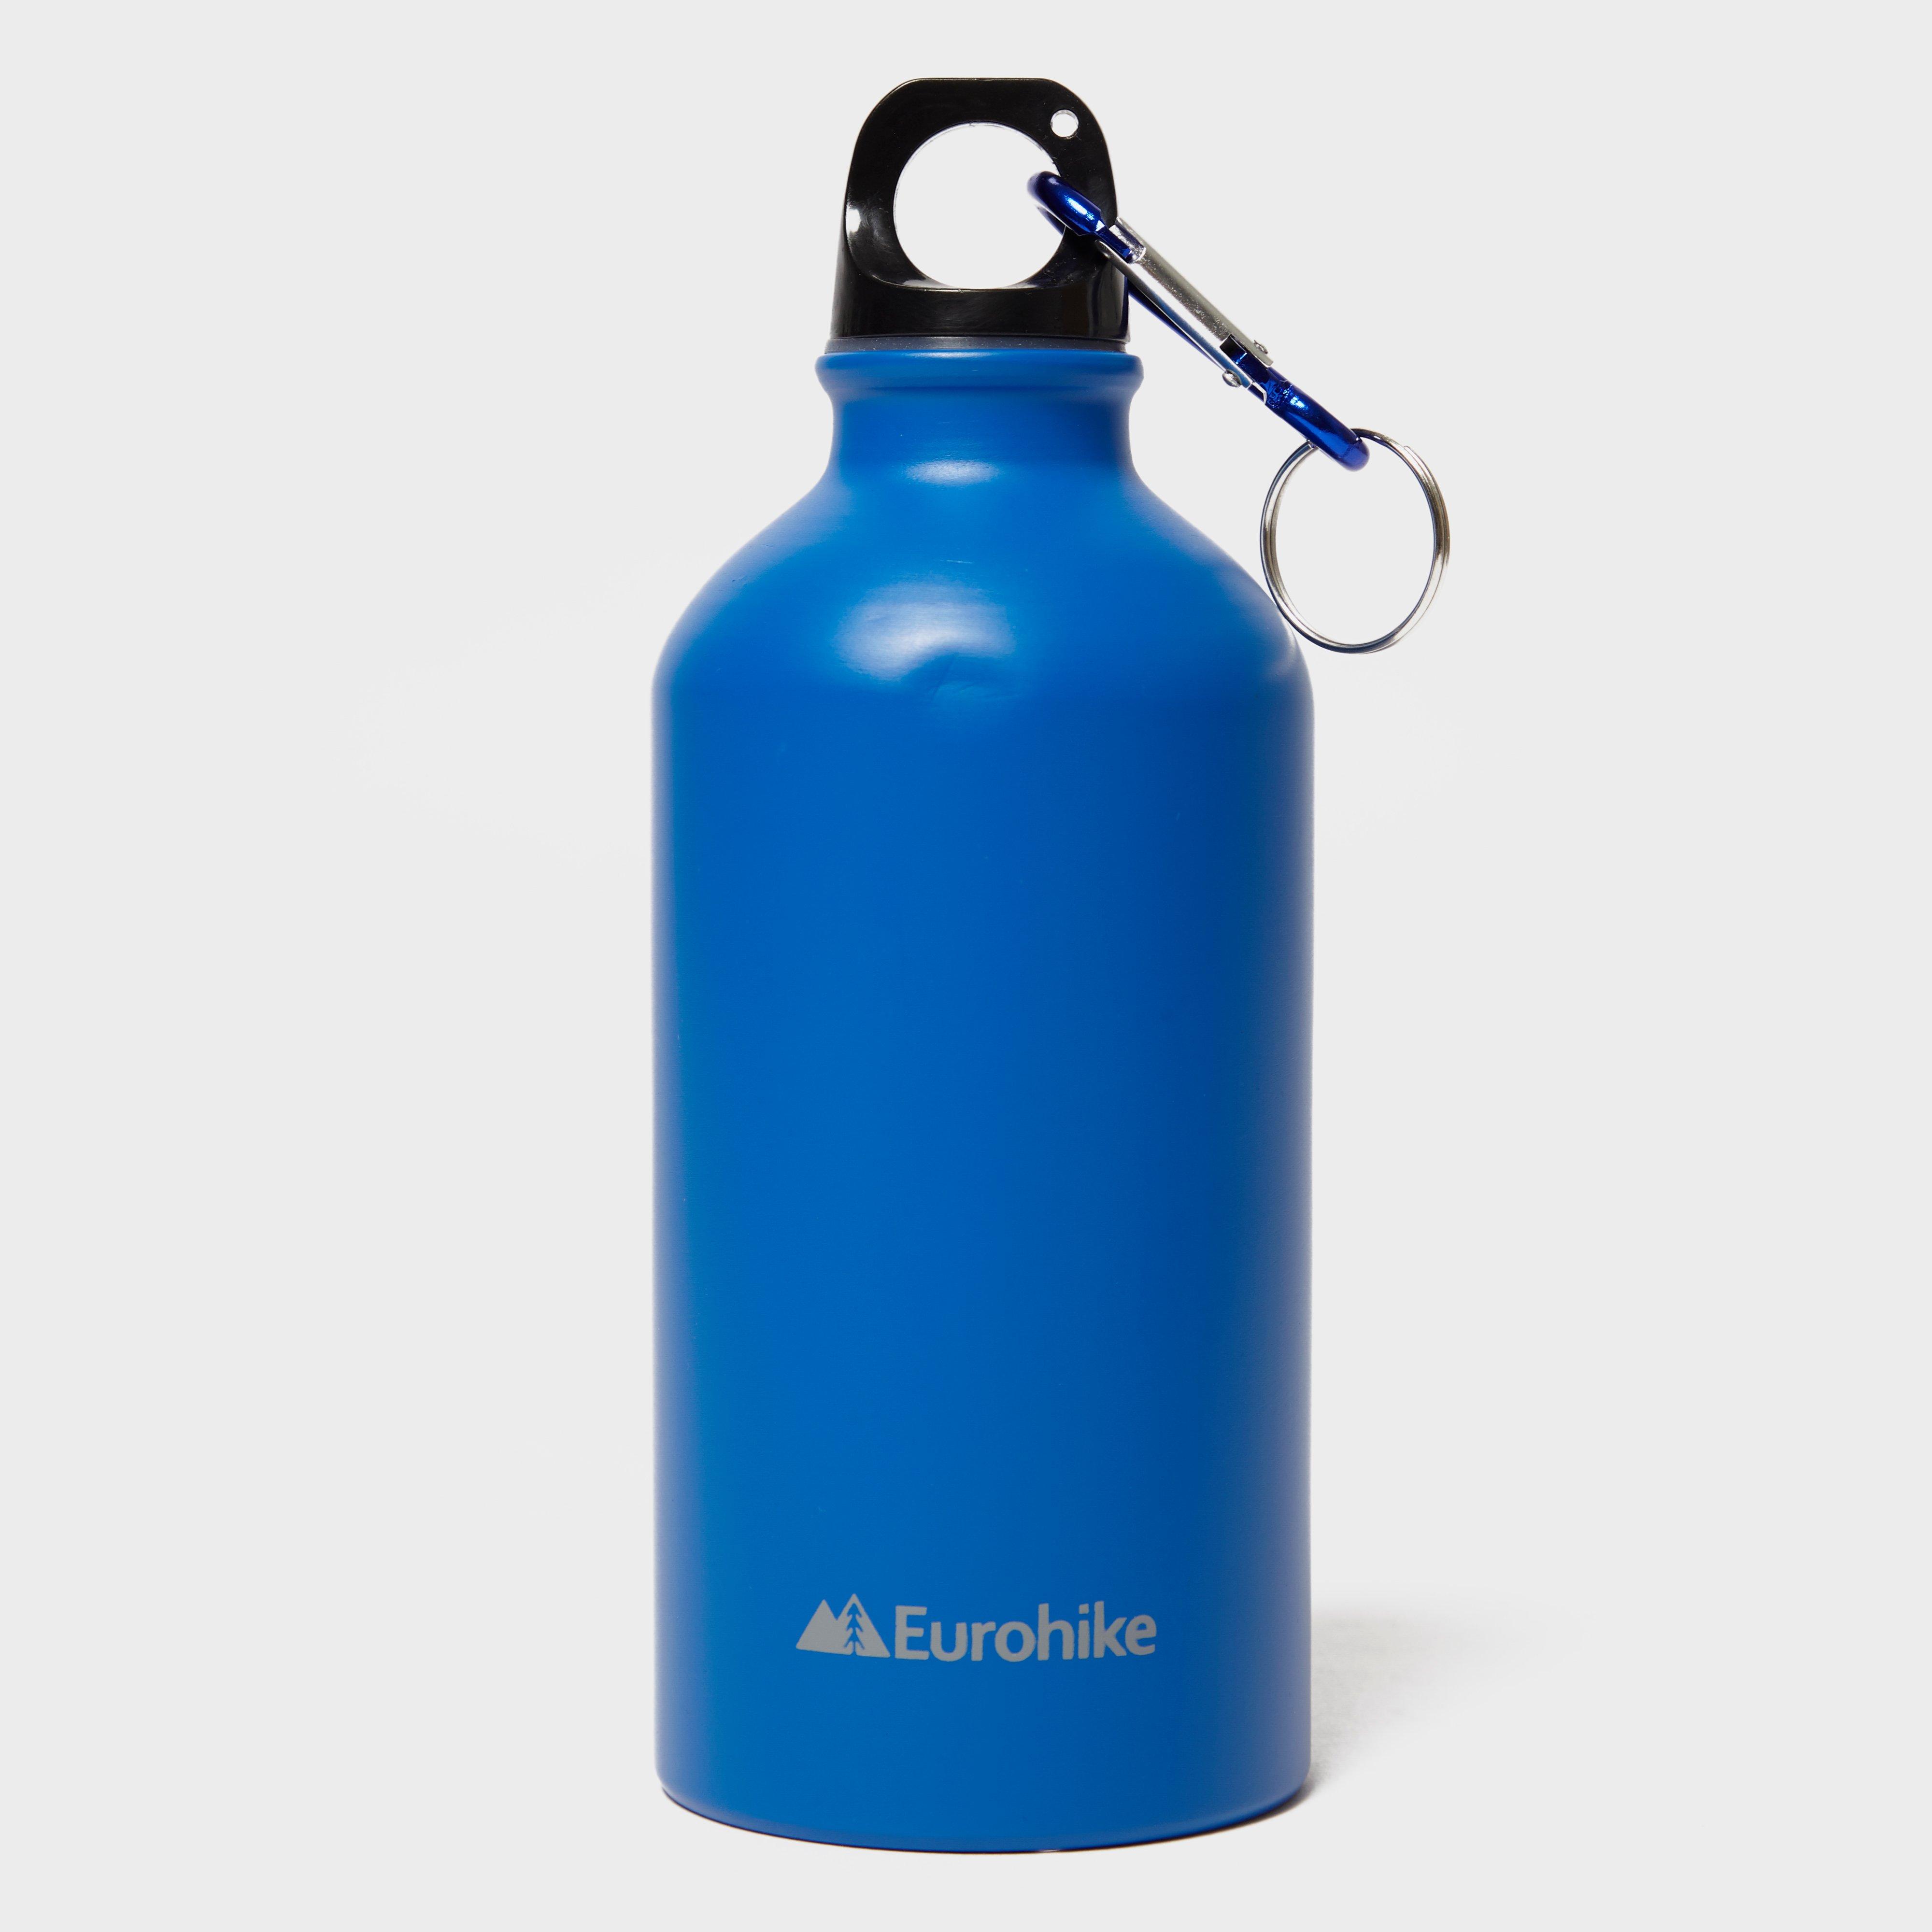 Aqua 0.5L Aluminium Water Bottle - Blue, Blue